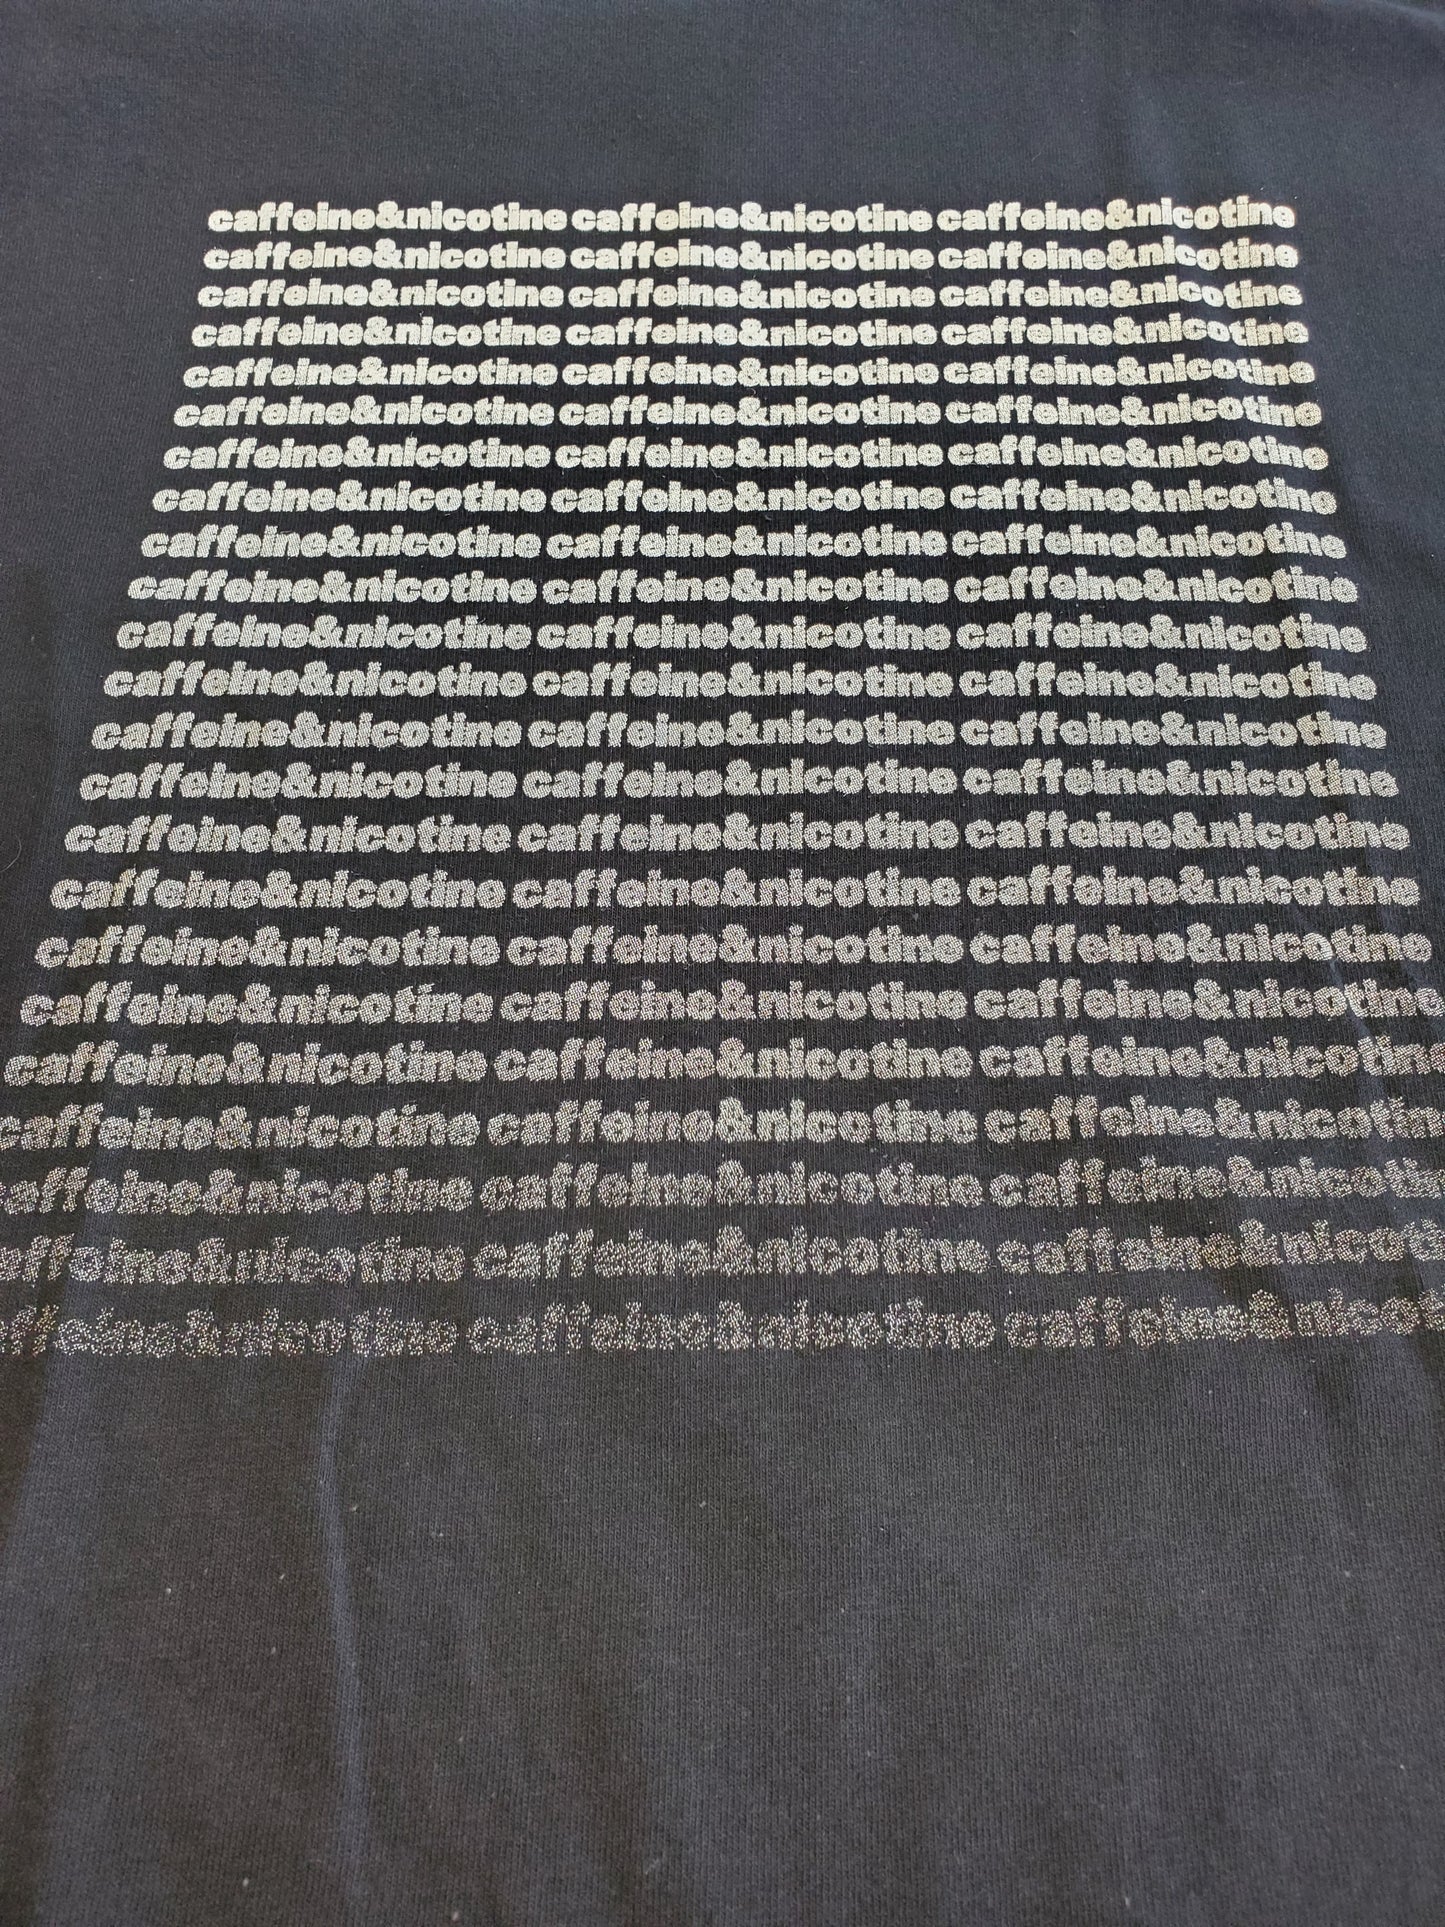 "caffeine&nicotine" Co. T-Shirt - (Limited Run)